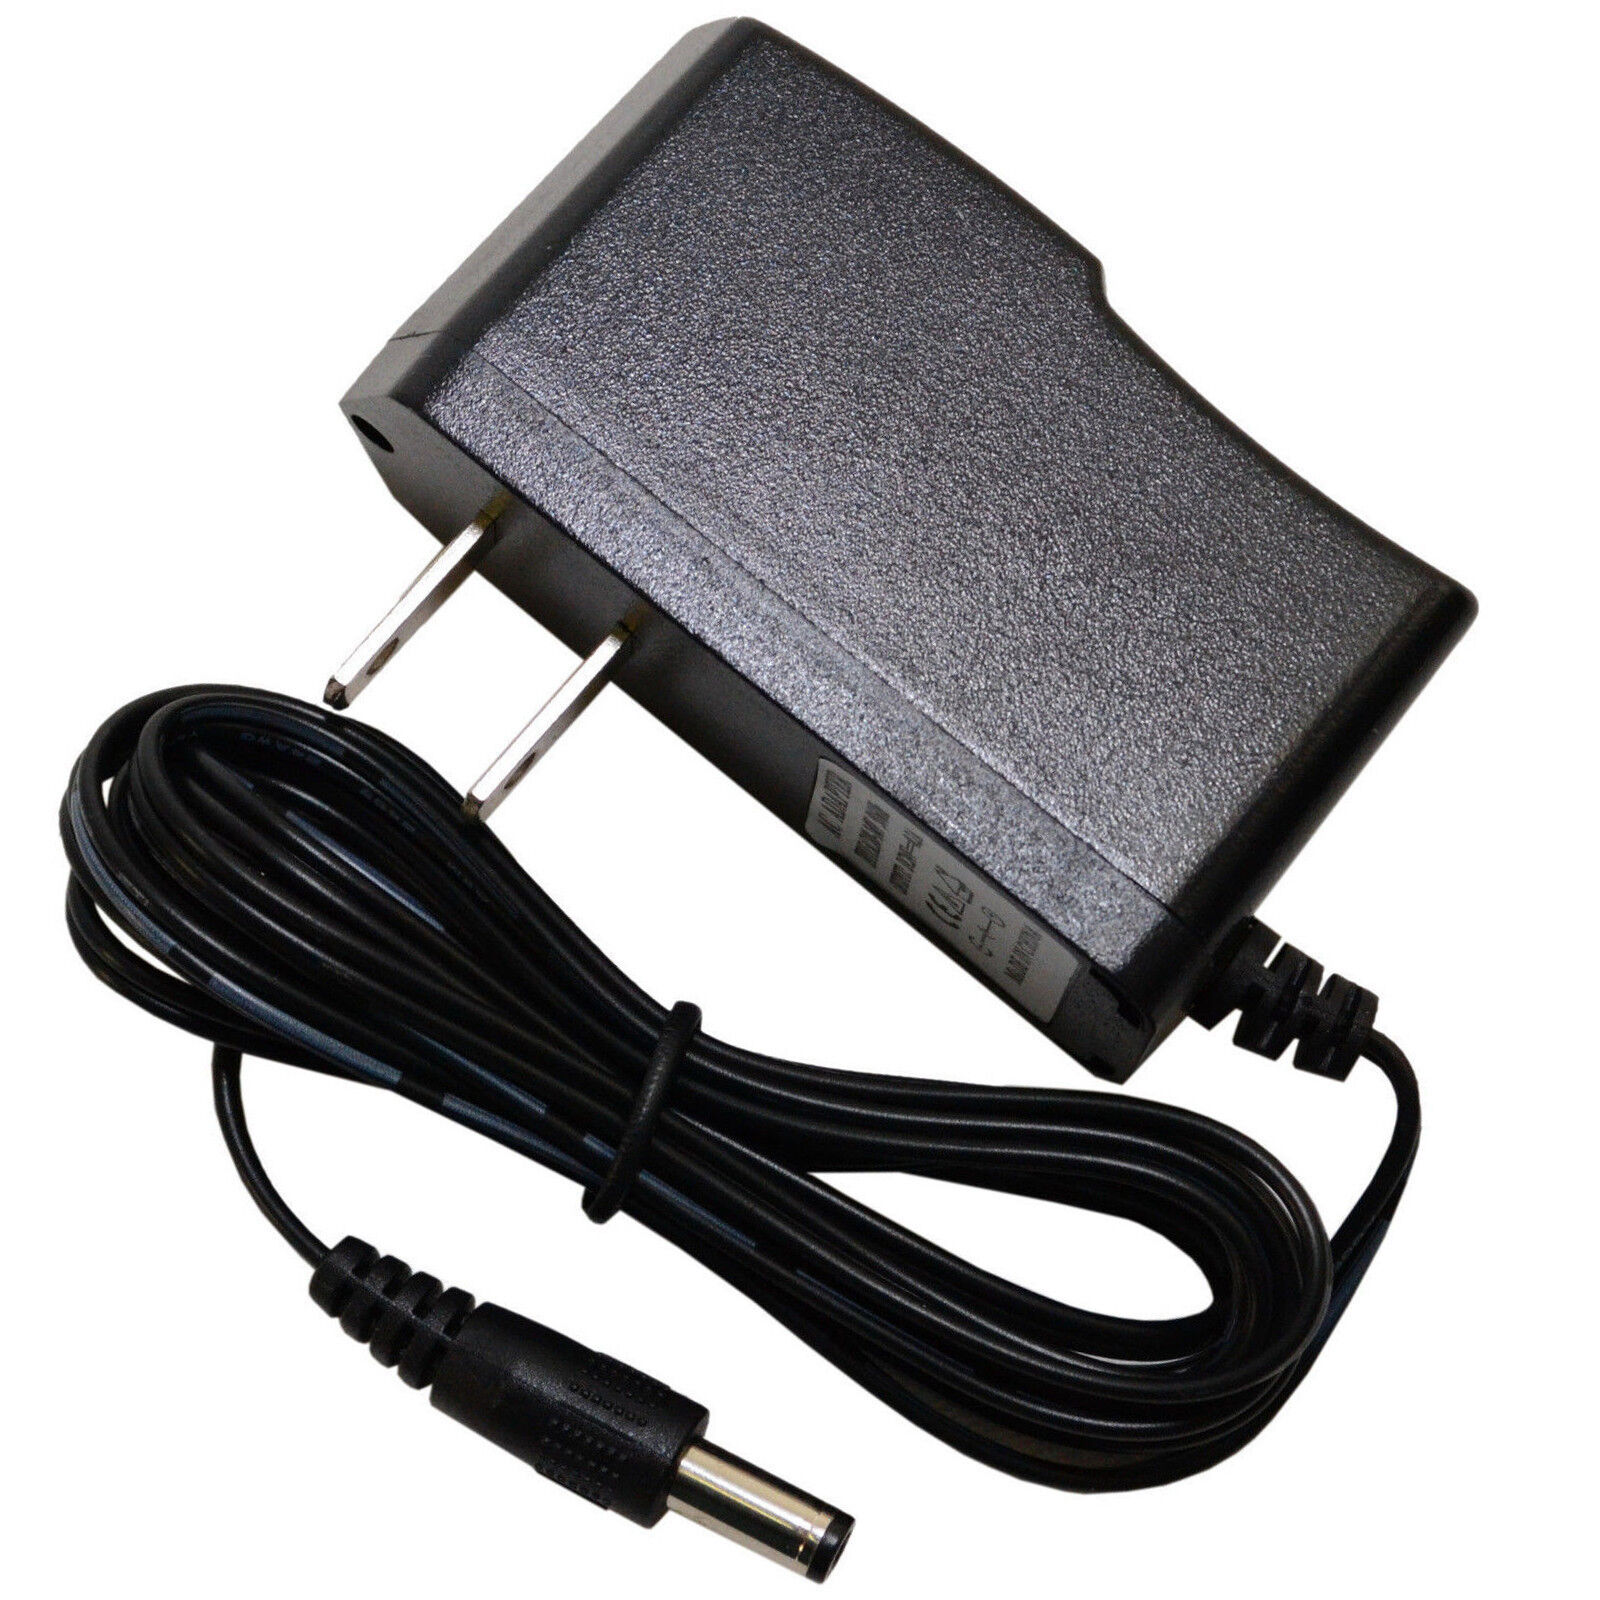 HQRP 24V AC Adapter for Electro-Harmonix Q-tron, Q-tron+, Classic Microsynth